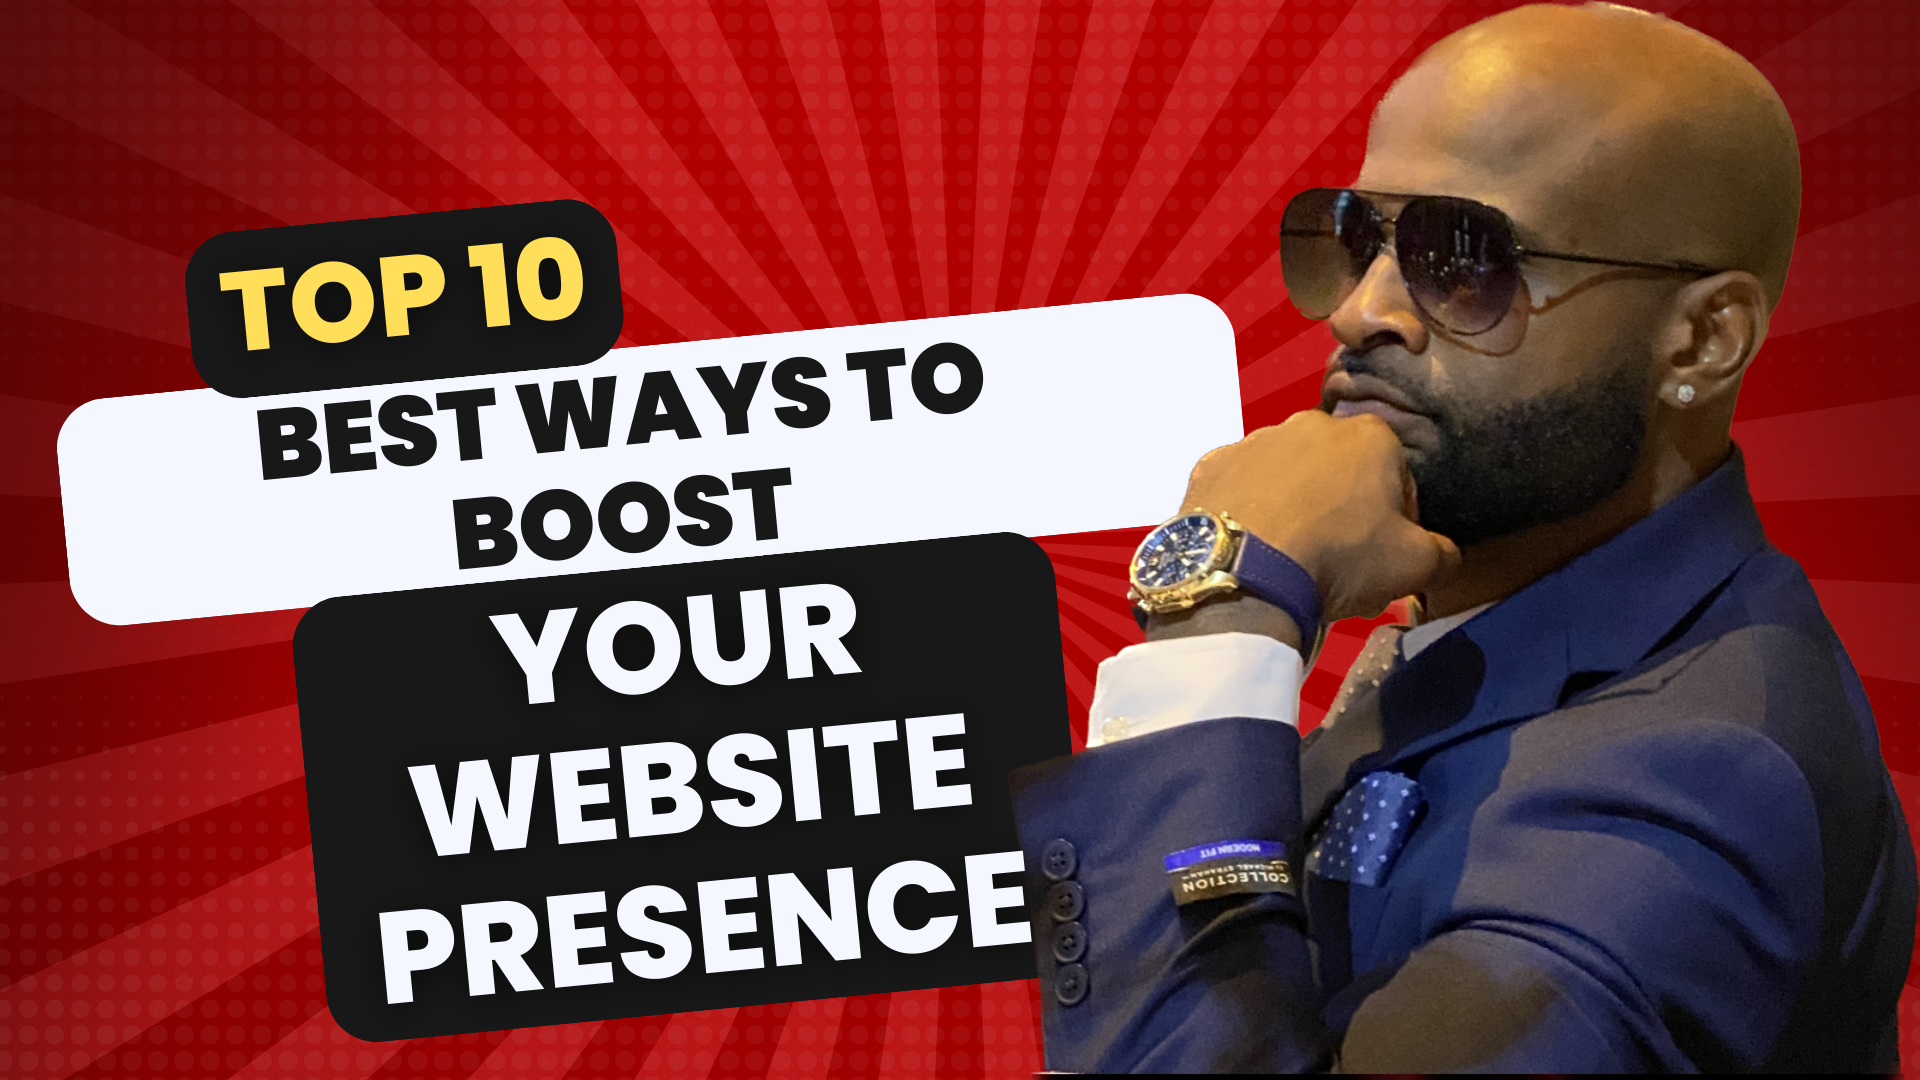 Top 10 Best Ways to Boost Your Website Presence